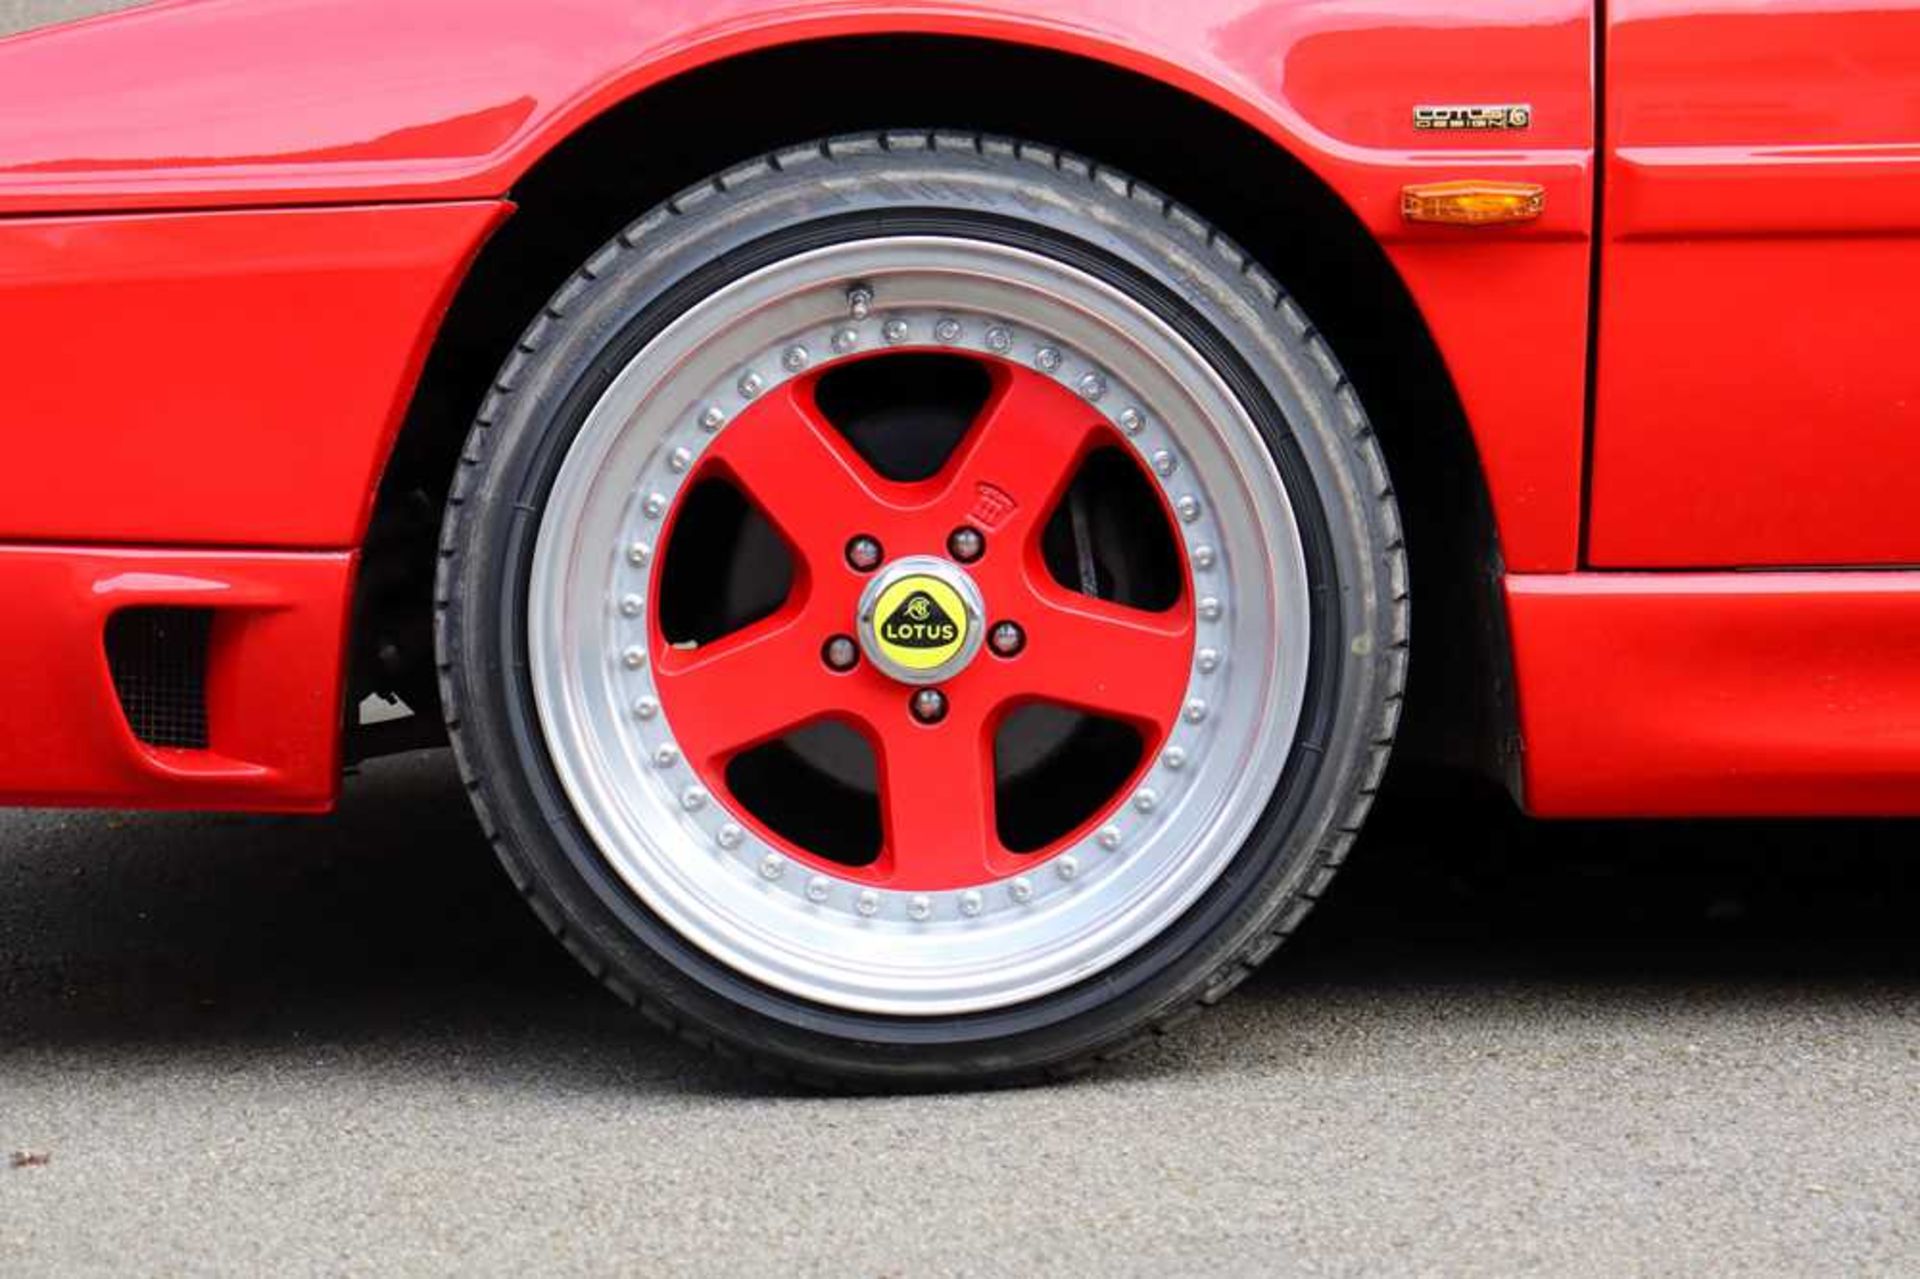 1989 Lotus Esprit Turbo Just 37,000 recorded miles - Image 31 of 72